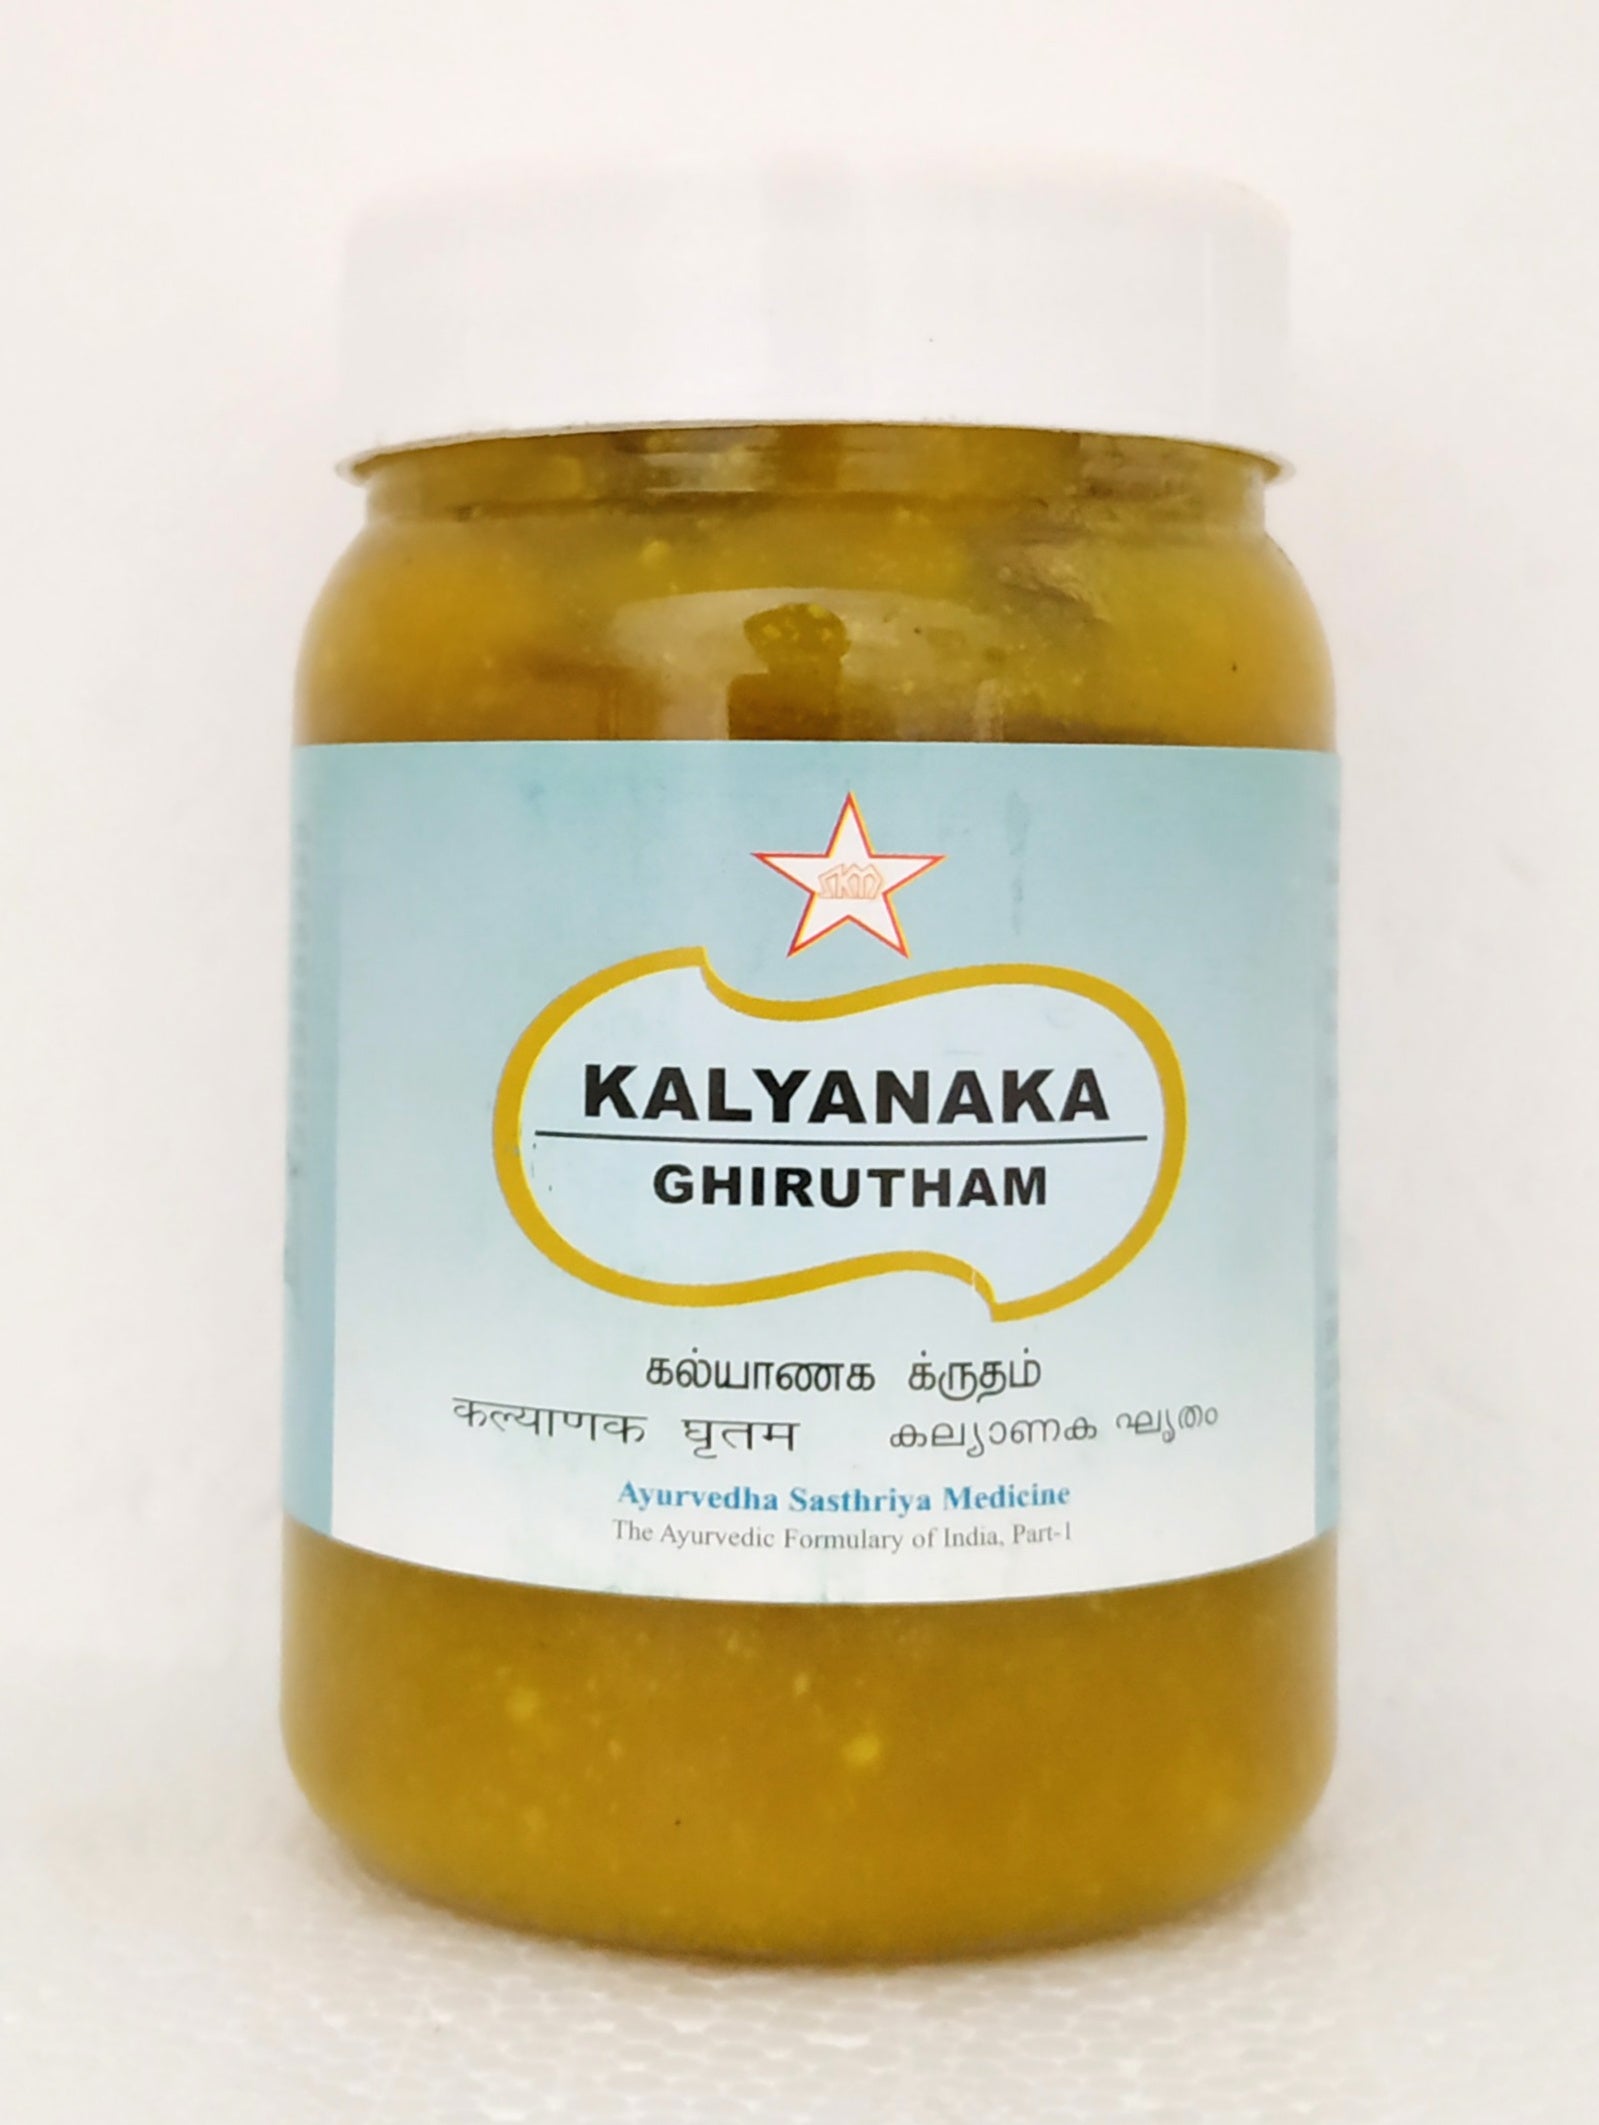 Shop Kalyanaka ghrutham 200gm at price 290.00 from SKM Online - Ayush Care